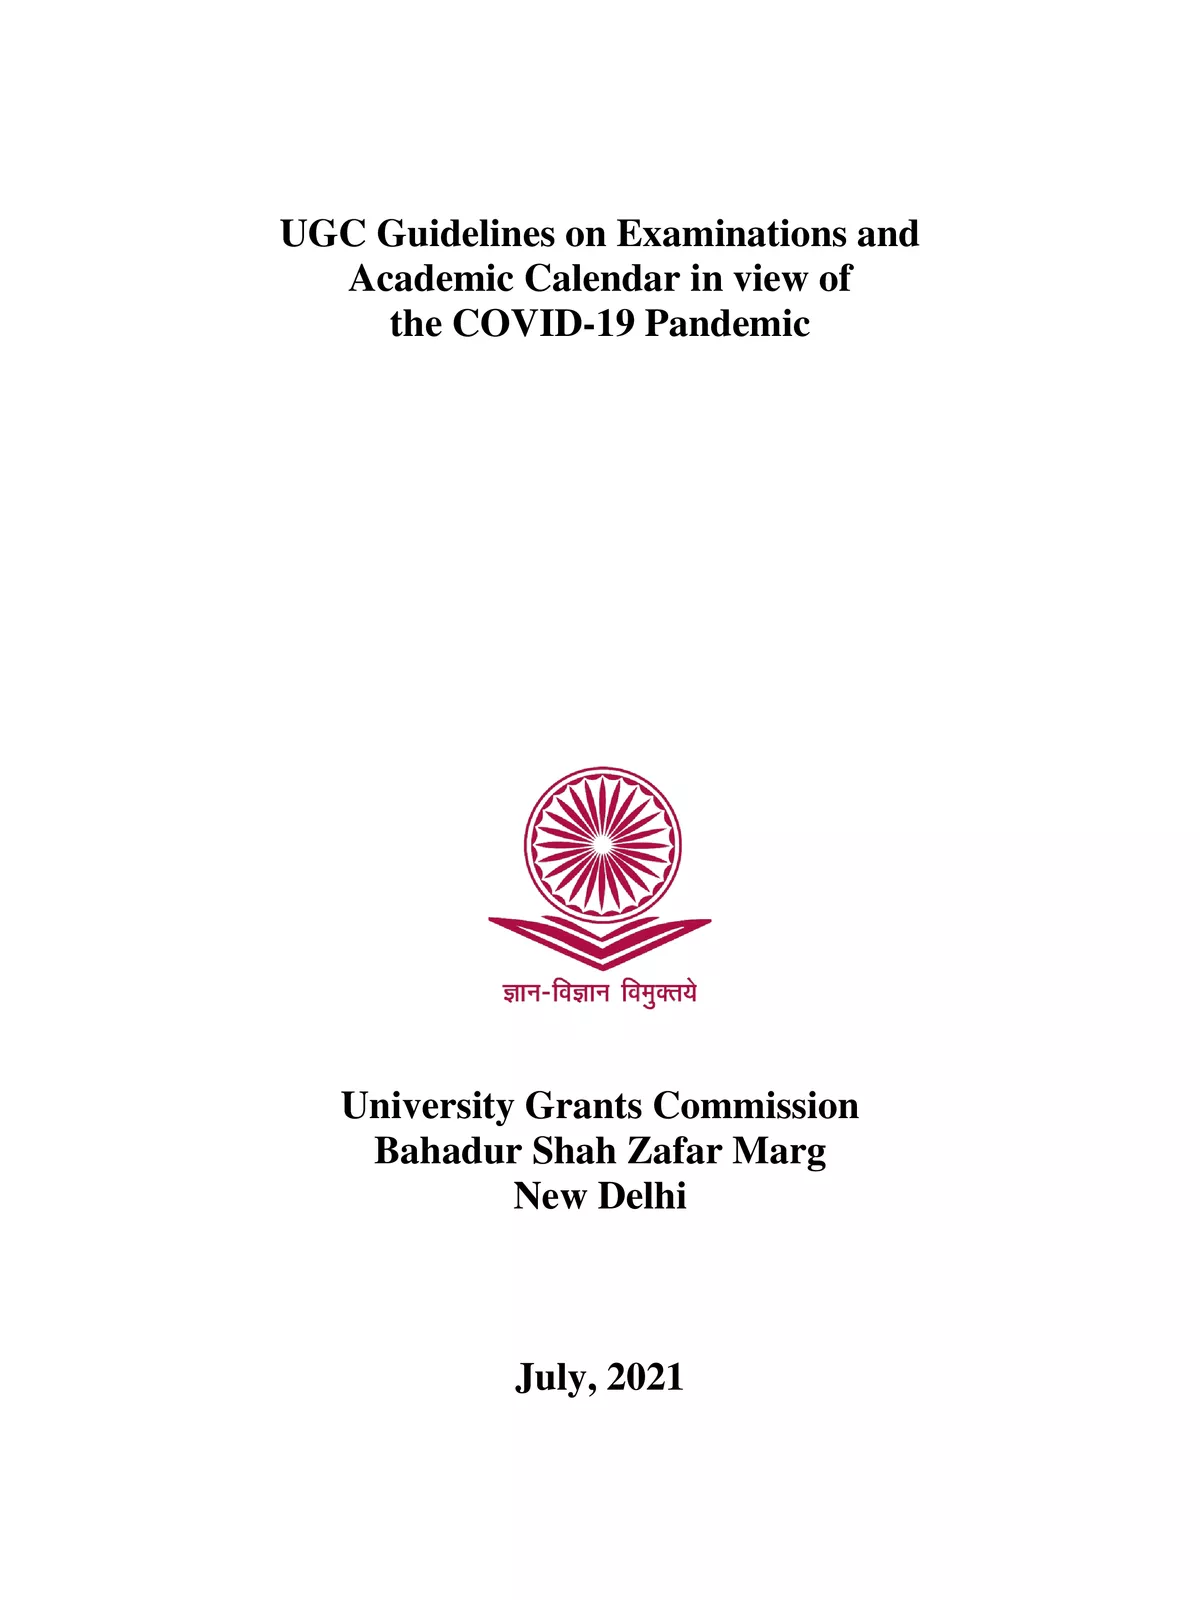 UGC Guidelines on Examinations & Academic Calendar July 2021